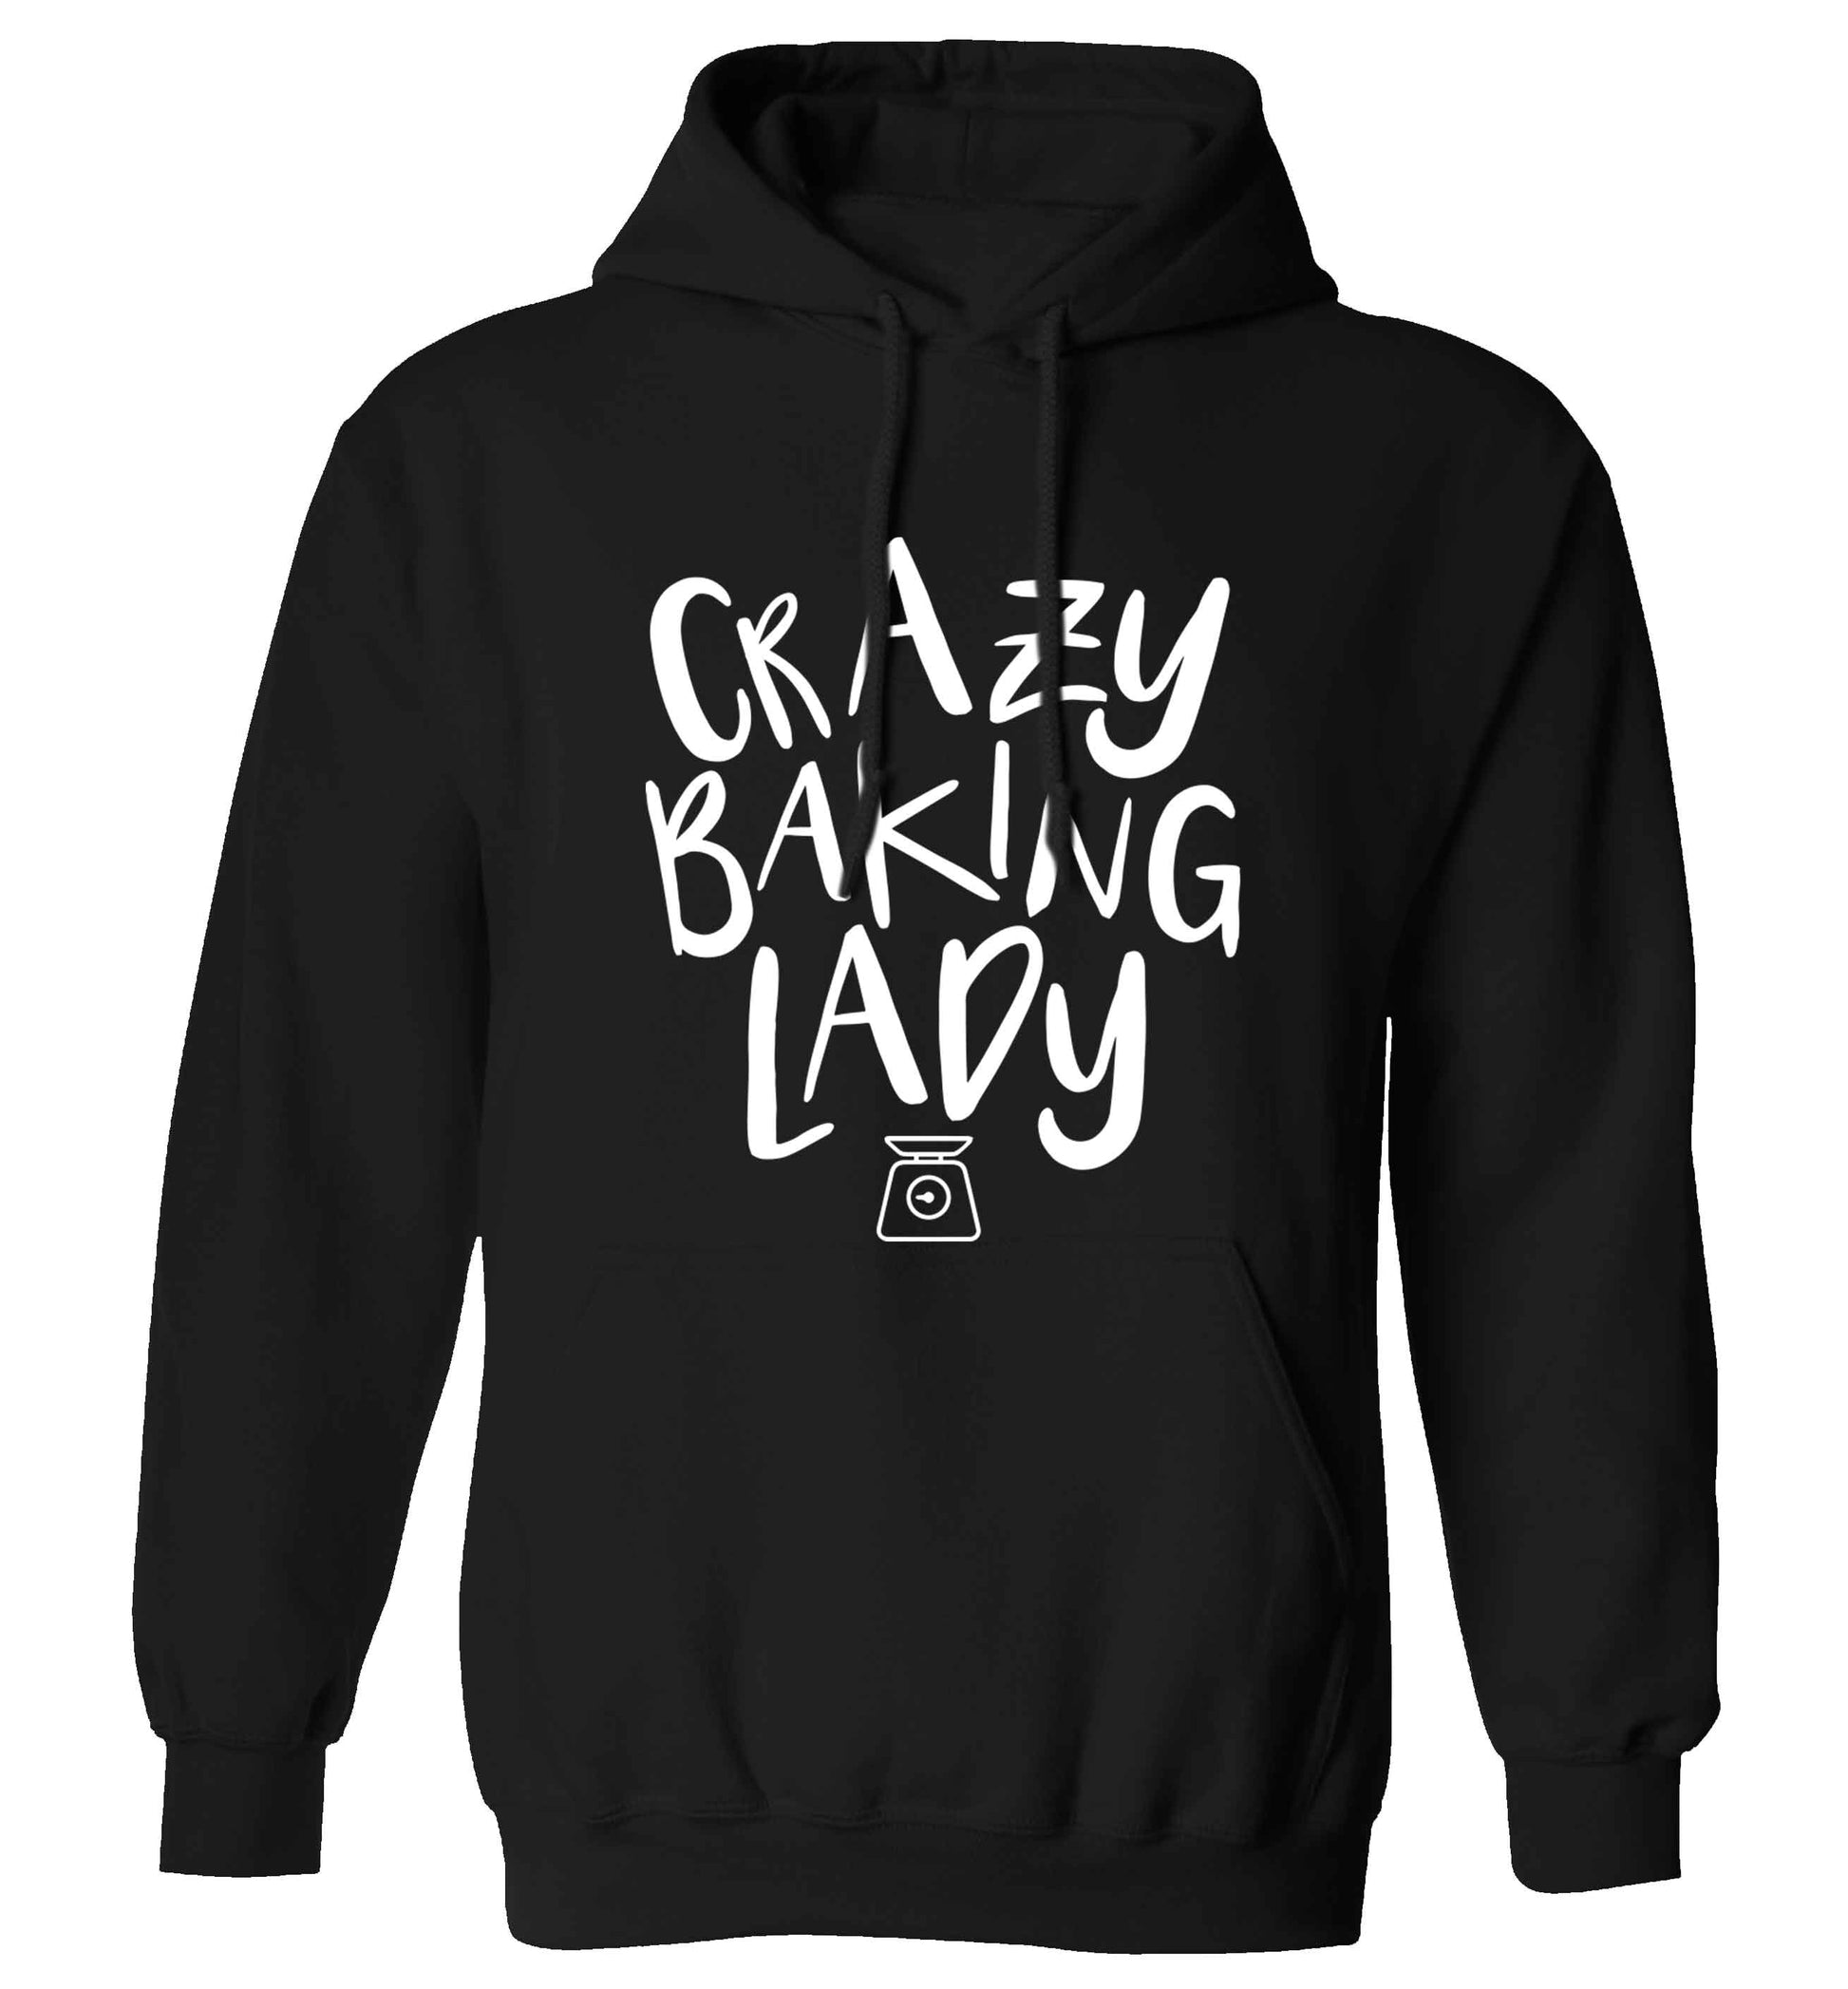 Crazy baking lady adults unisex black hoodie 2XL